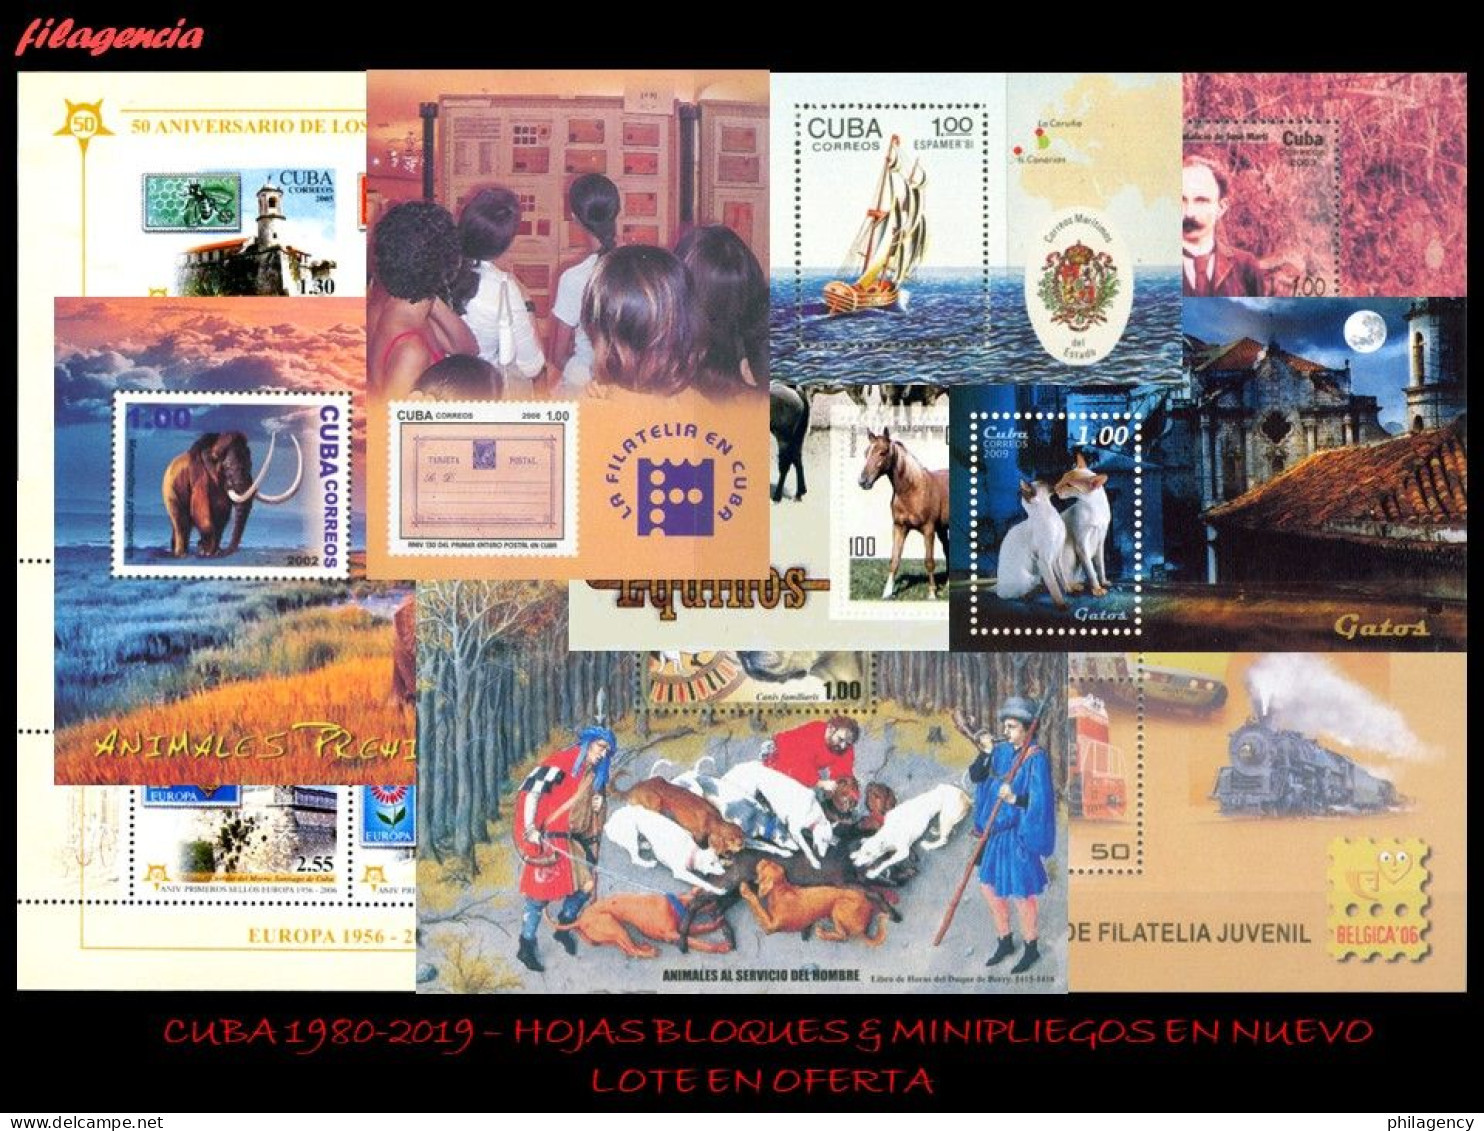 LOTES EN OFERTA. CUBA MINT. 1980-2019 LOTE DE 100 HOJAS BLOQUES & MINIPLIEGOS DIFERENTES MNH - Blokken & Velletjes